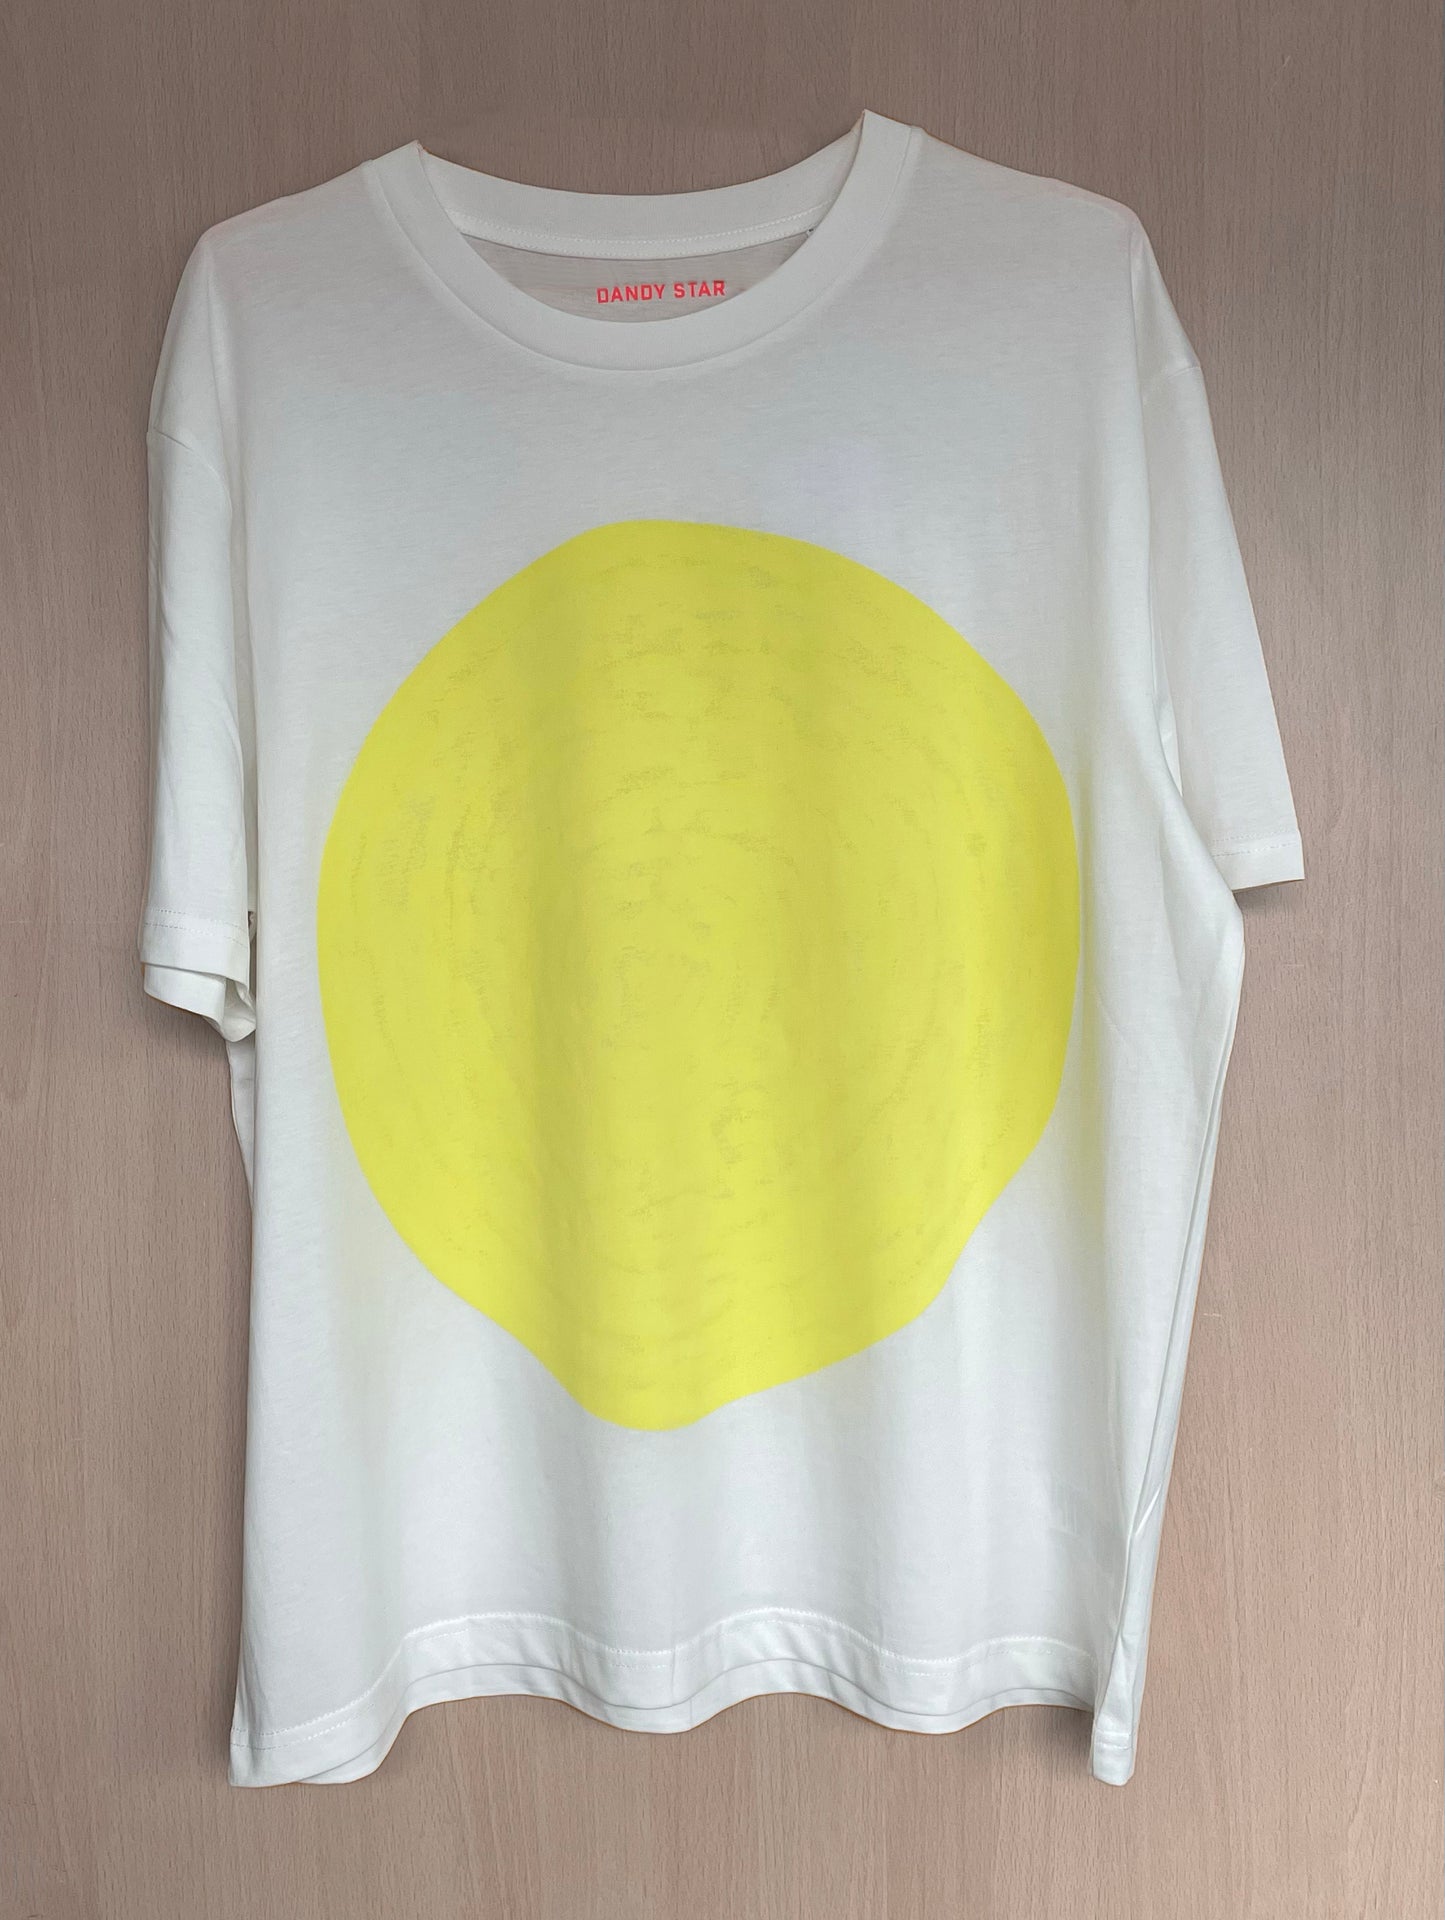 Painted yellow dot t-shirt